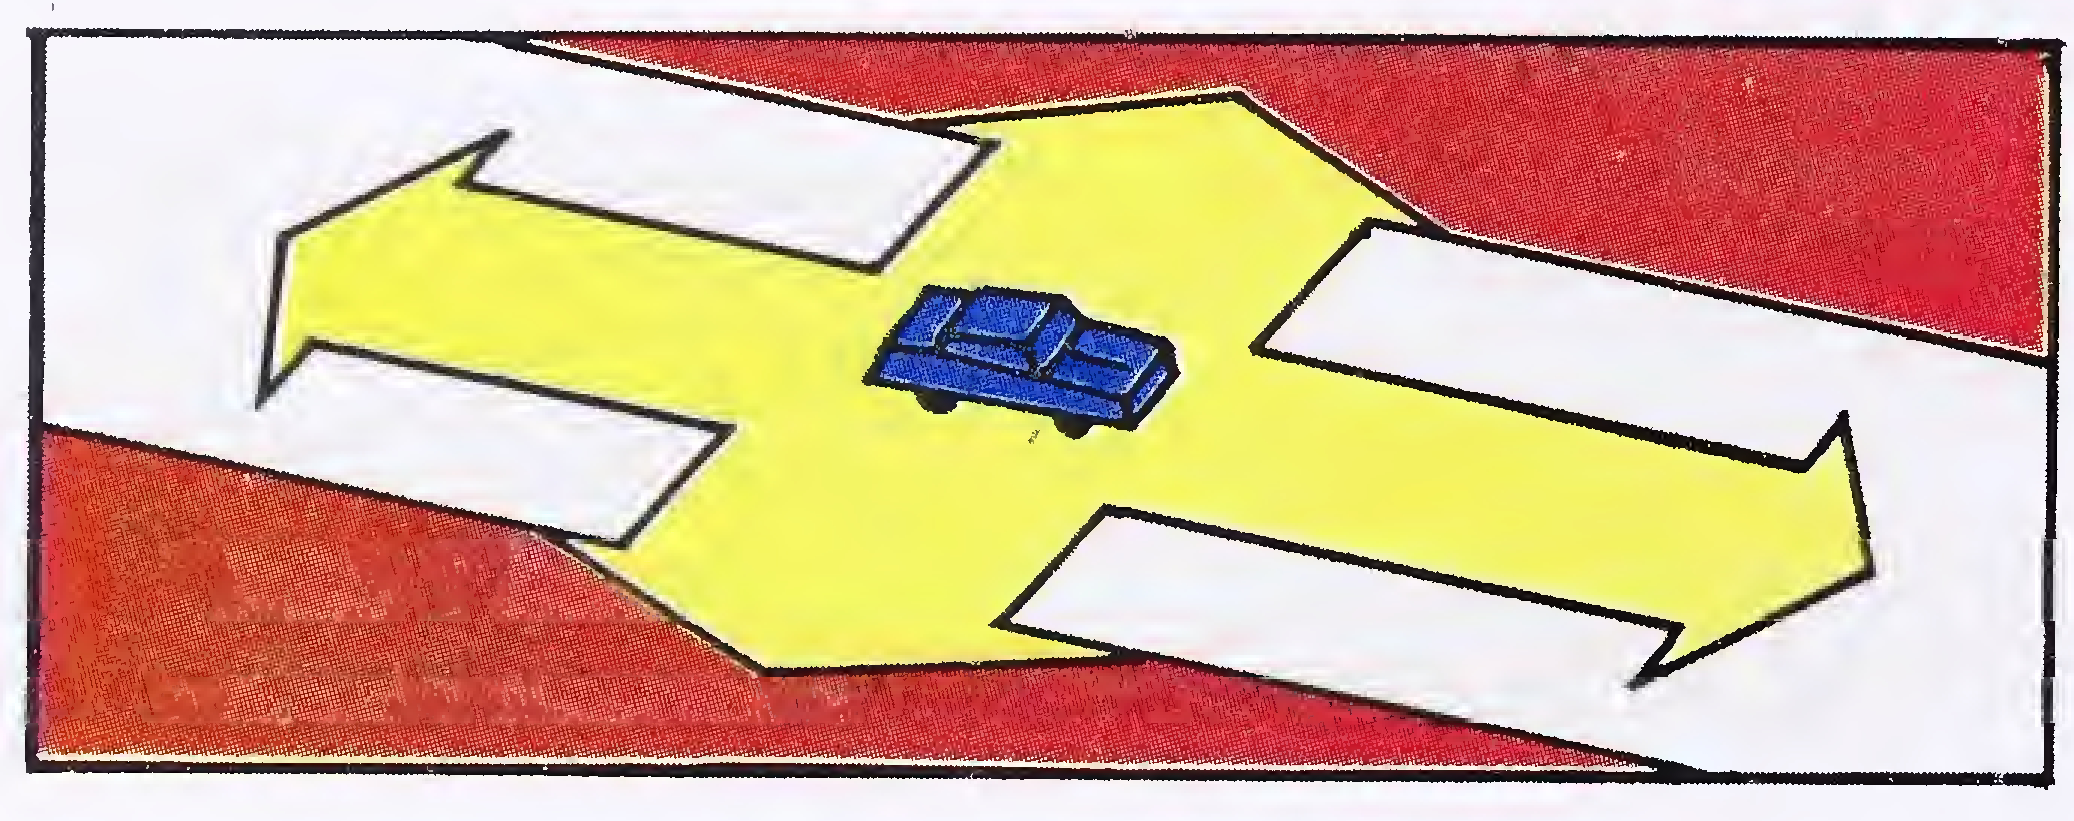 Fig. 25. Vehicle Space Cushion